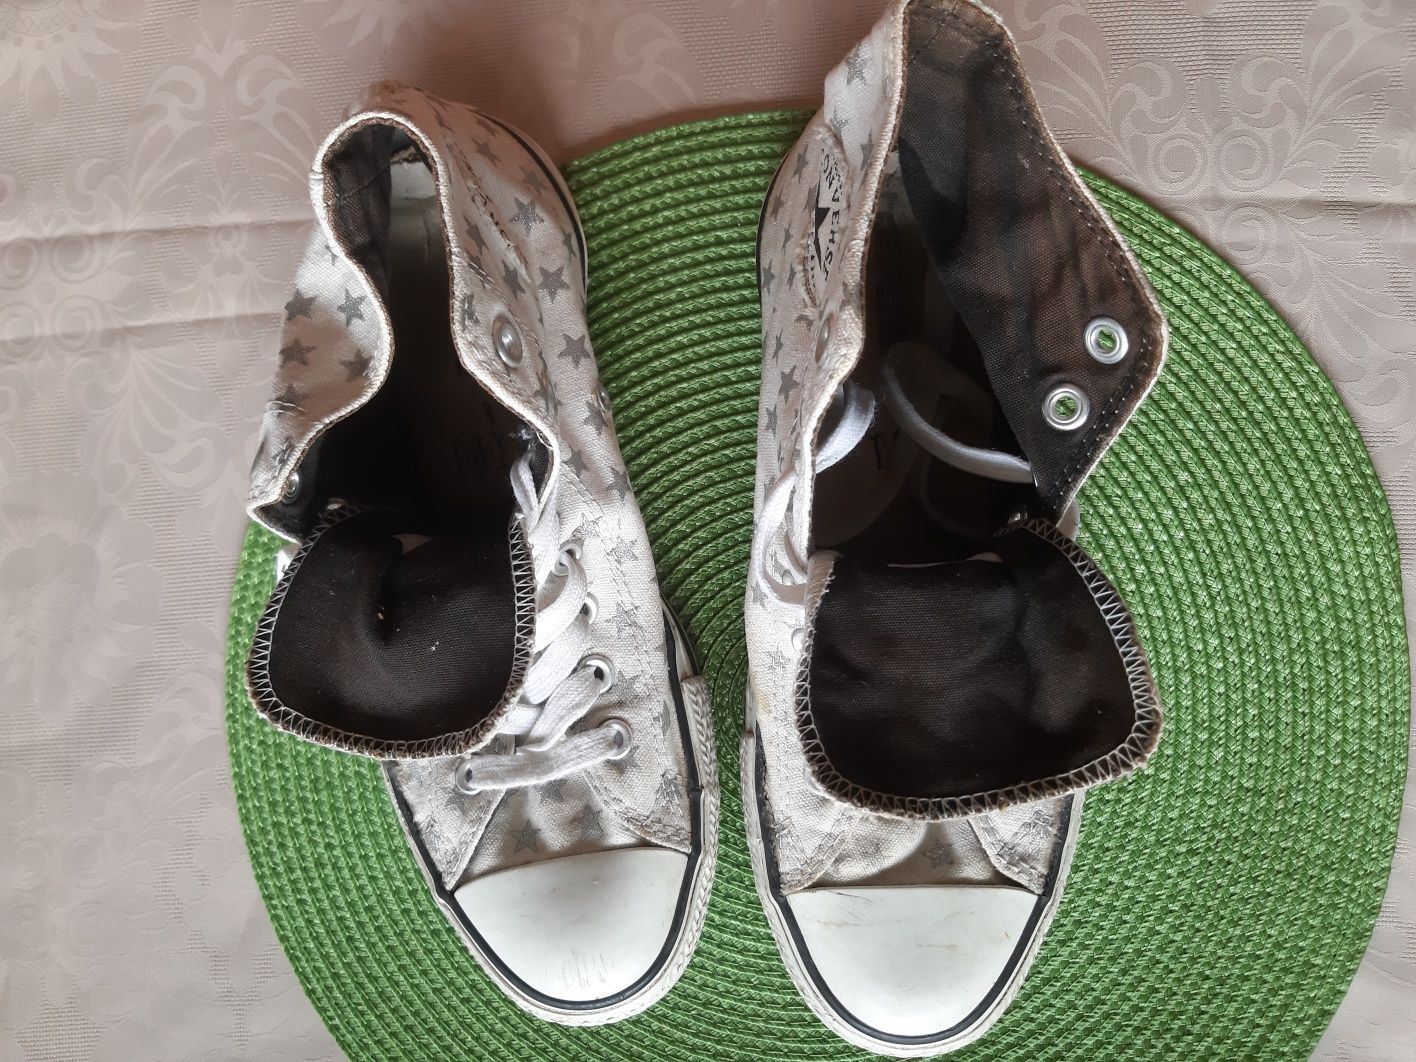 Converse trampki białe 41,5 limited Edition super buty usa